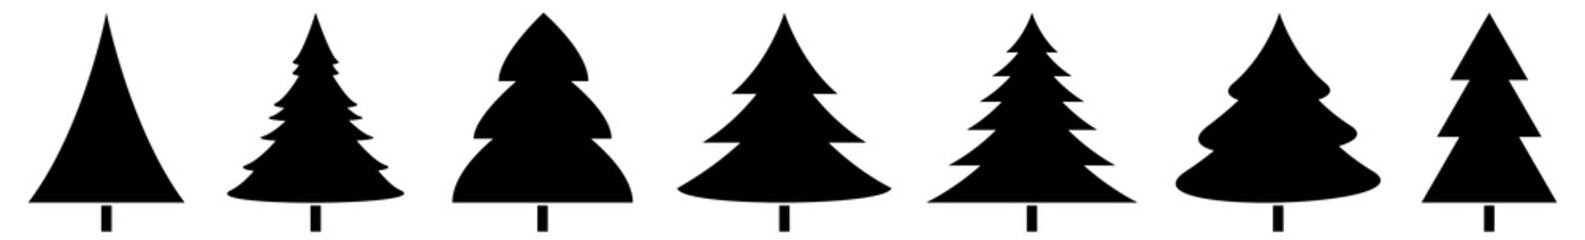 Christmas Tree Black Icon | Fir Tree Illustration | x-mas Symbol | Logo | Isolated Variations